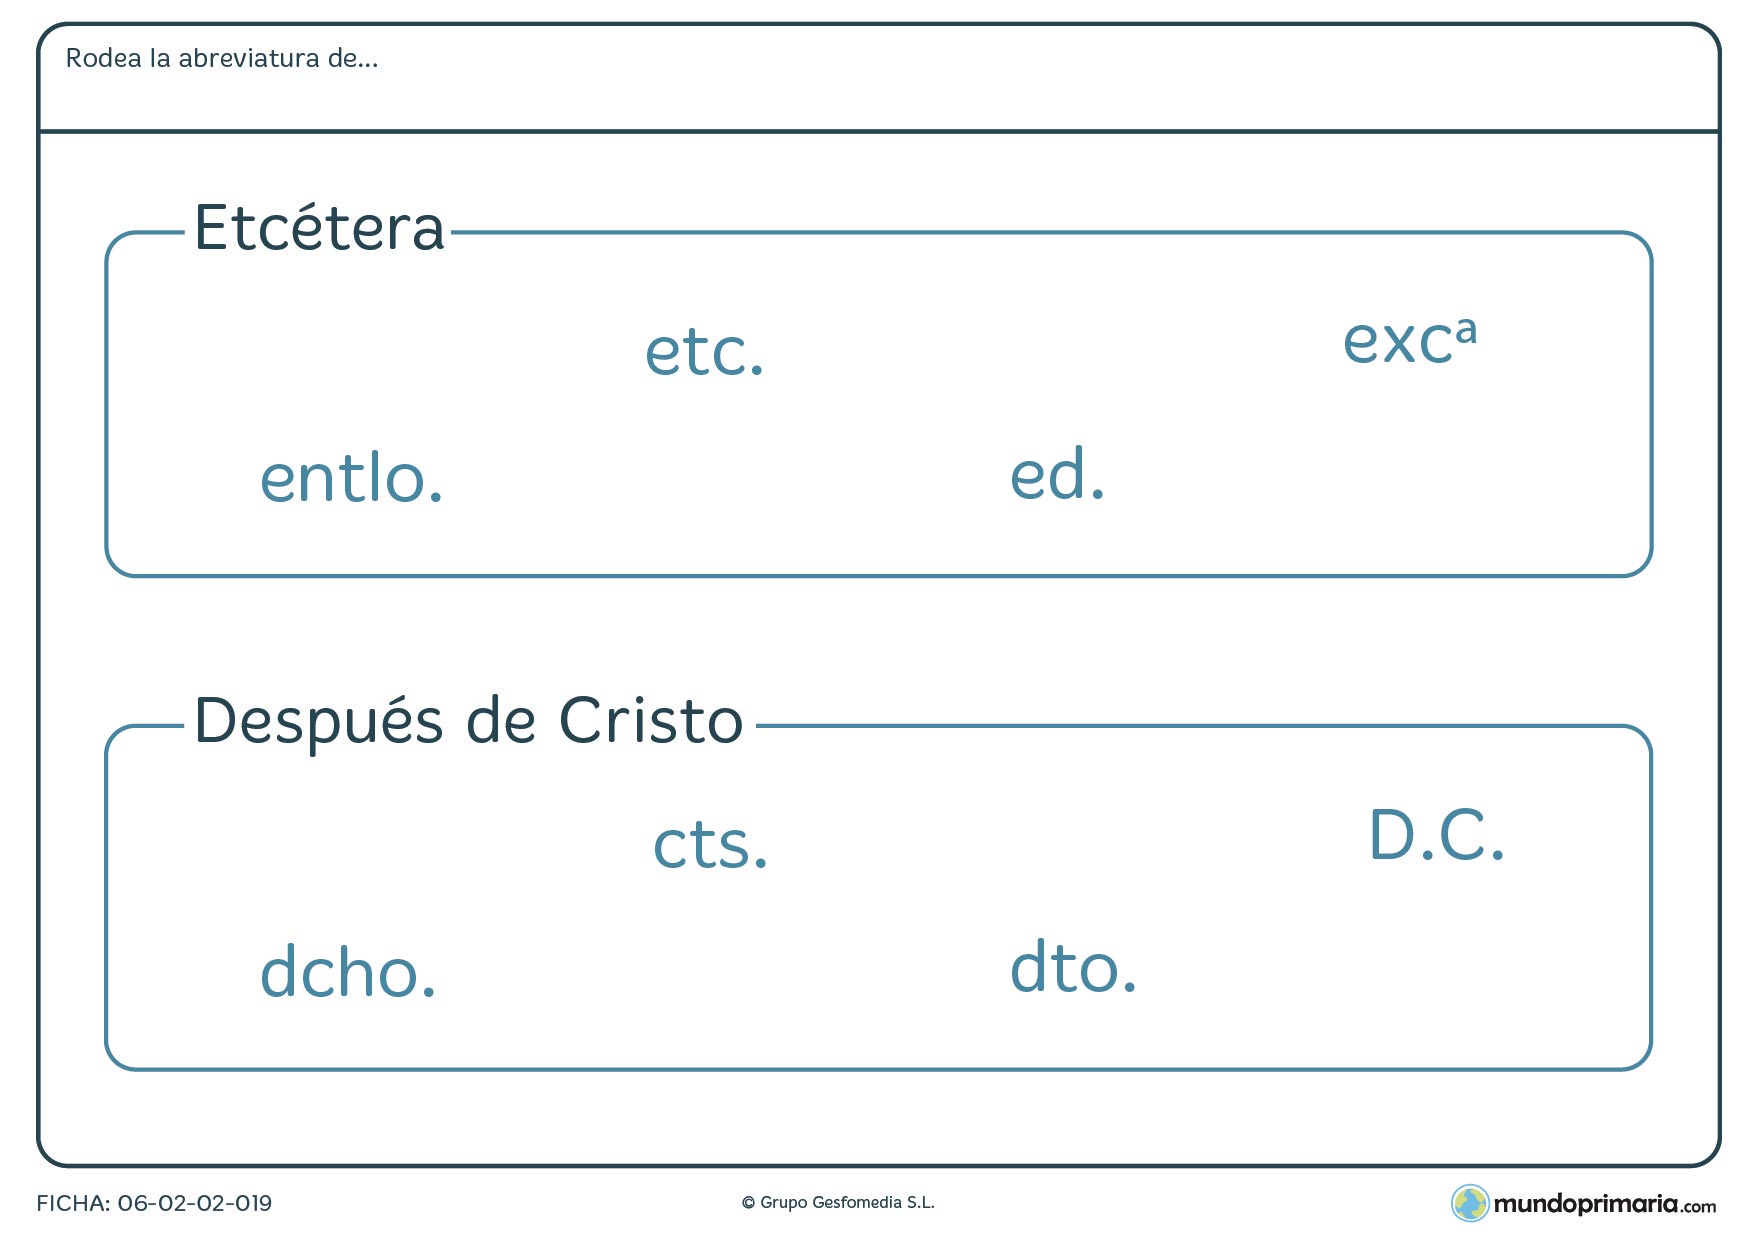 Ficha de lenguaje para aprender distintos tipos de abreviaturas